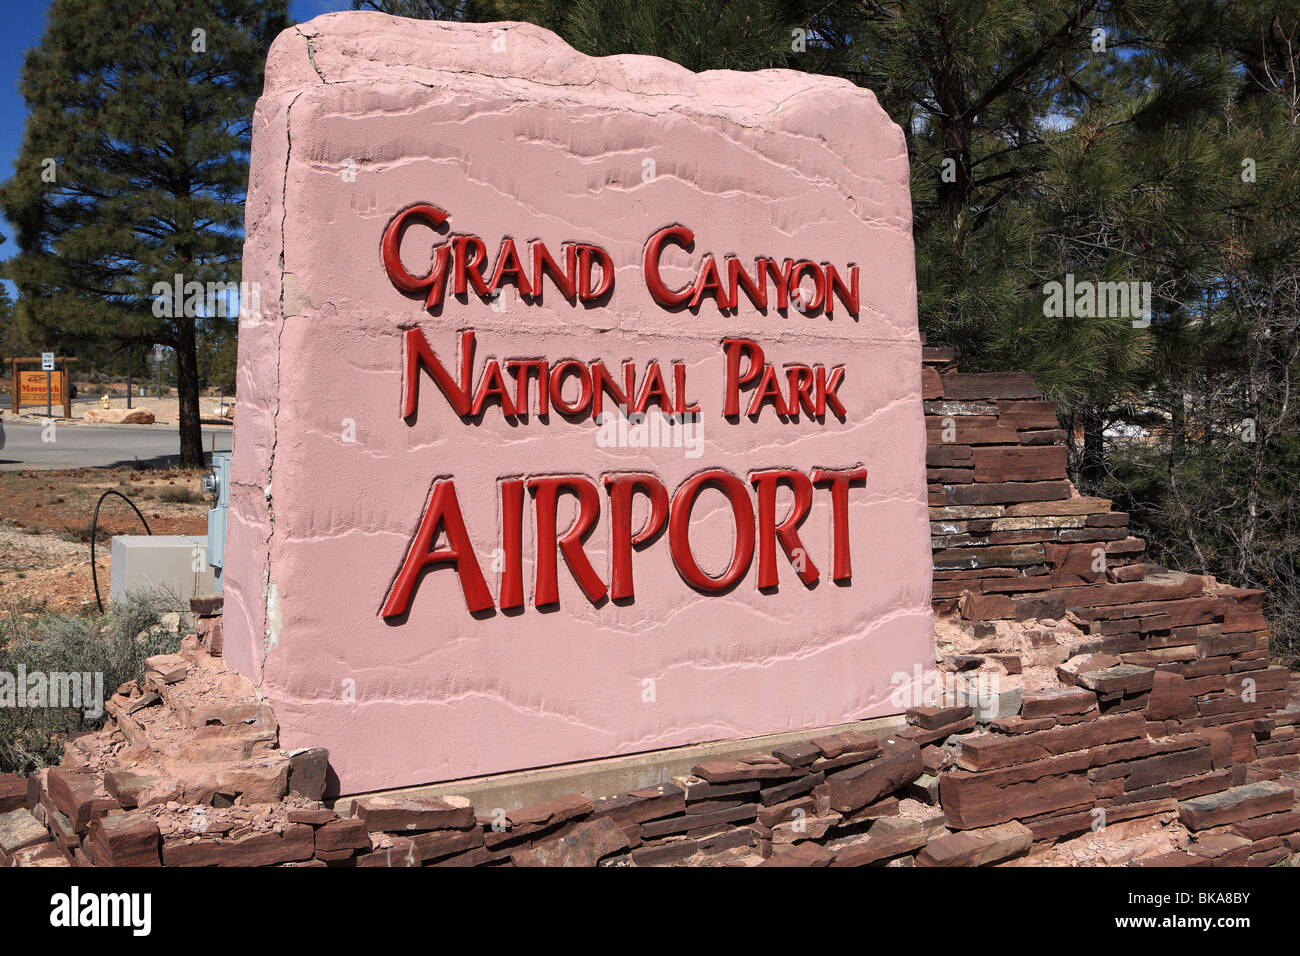 Grand Canyon National Park Airport Schild am Eingang zum Flughafen Stockfoto